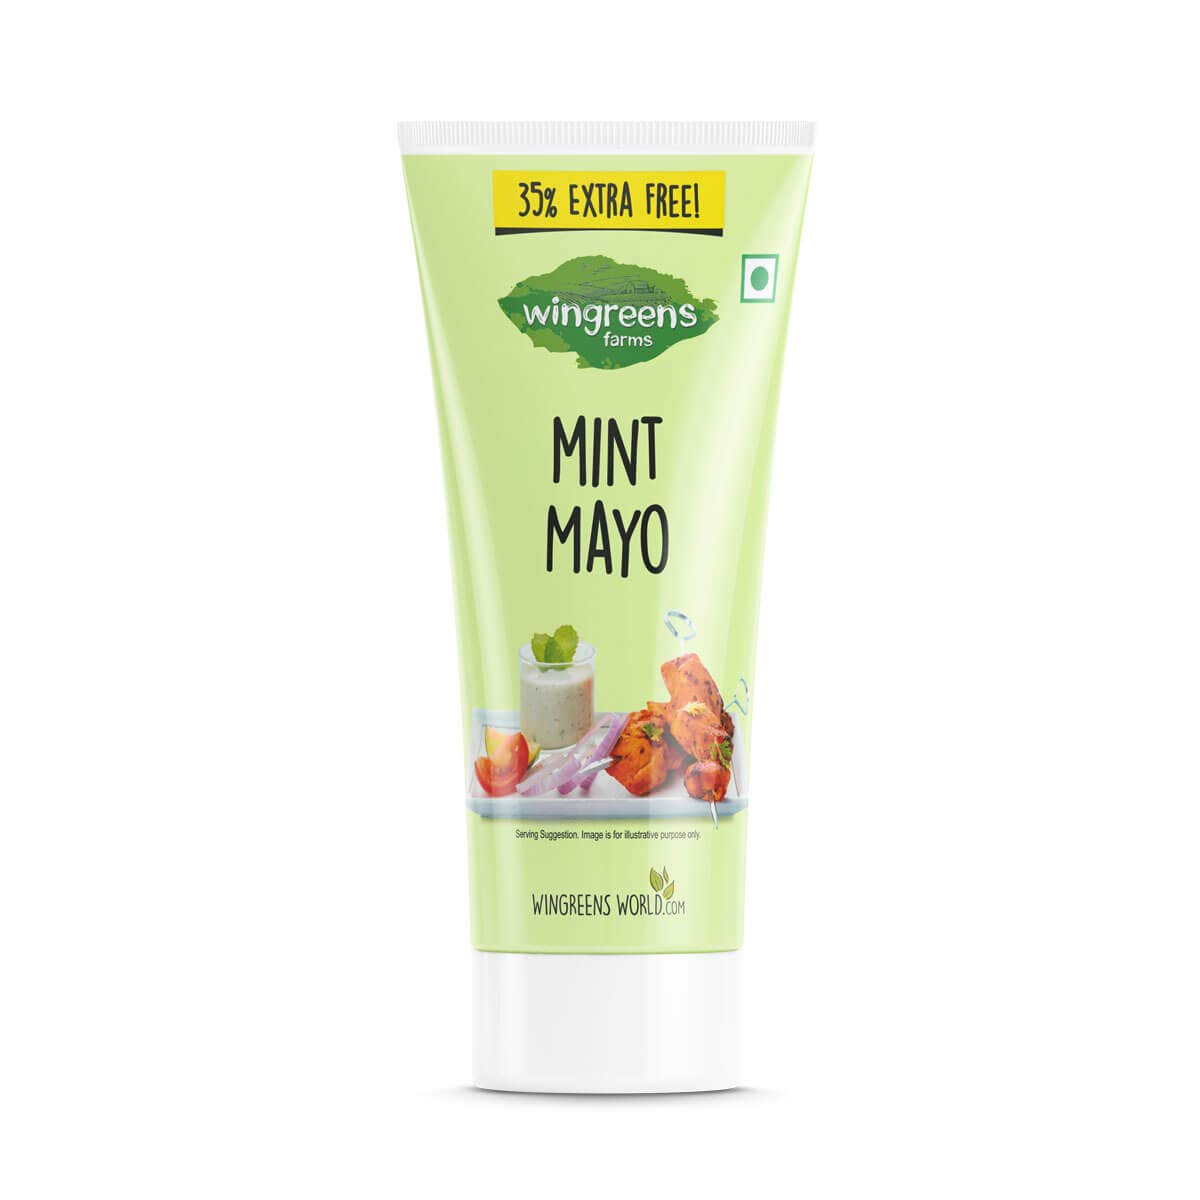 wingreens mint mayo